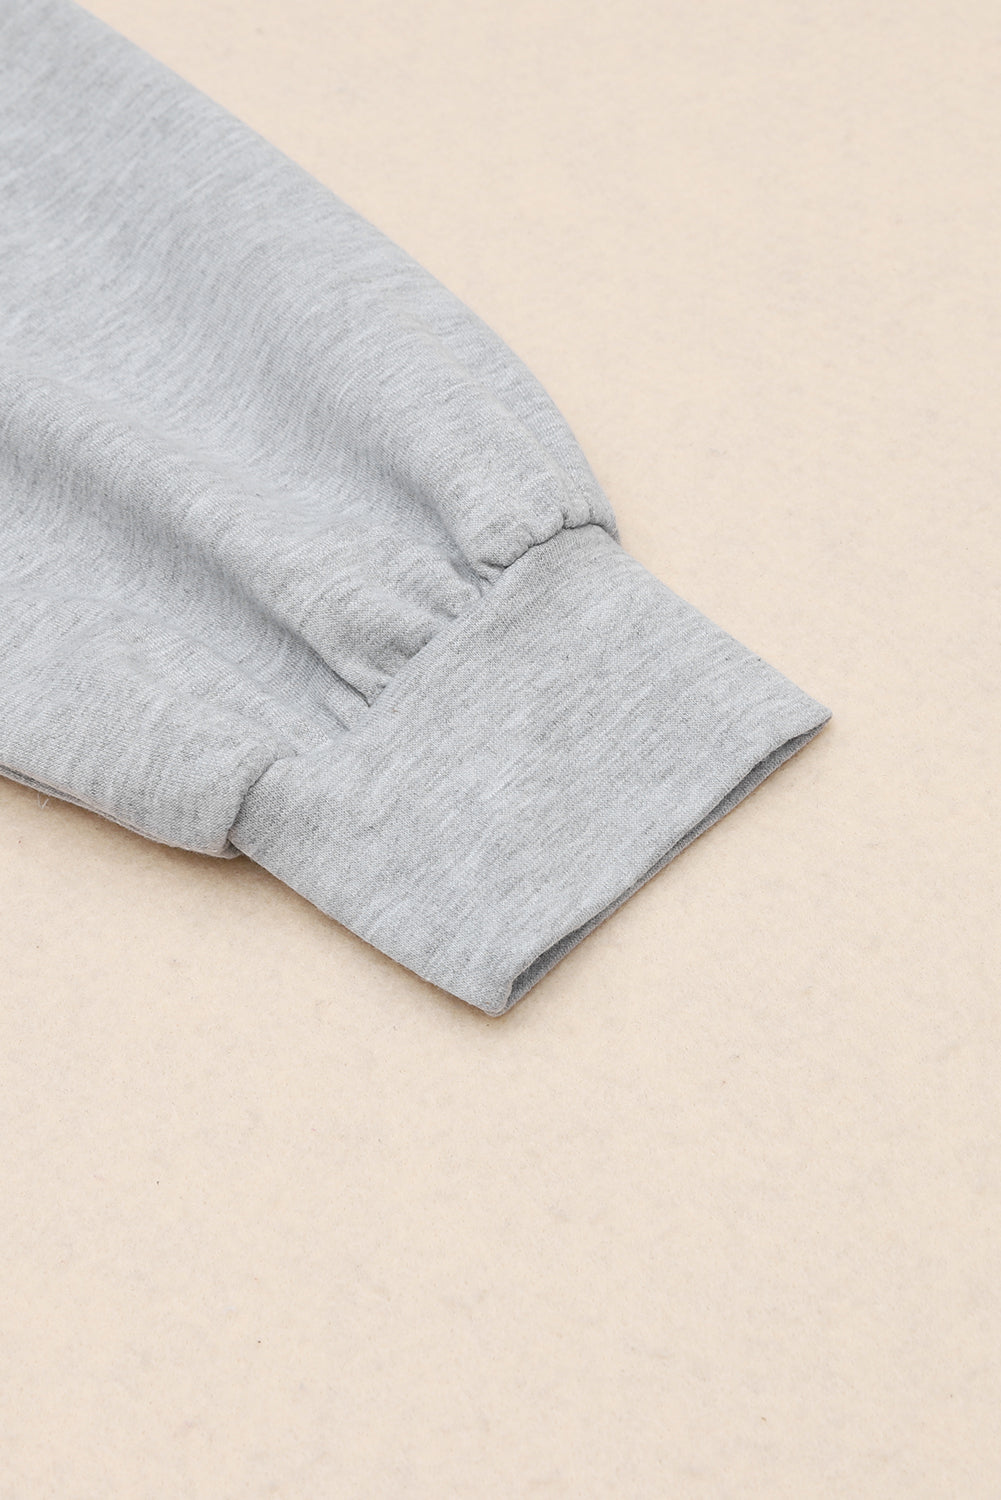 Khaki Colorblock Stitching Irregular Hem Long Sleeve Top